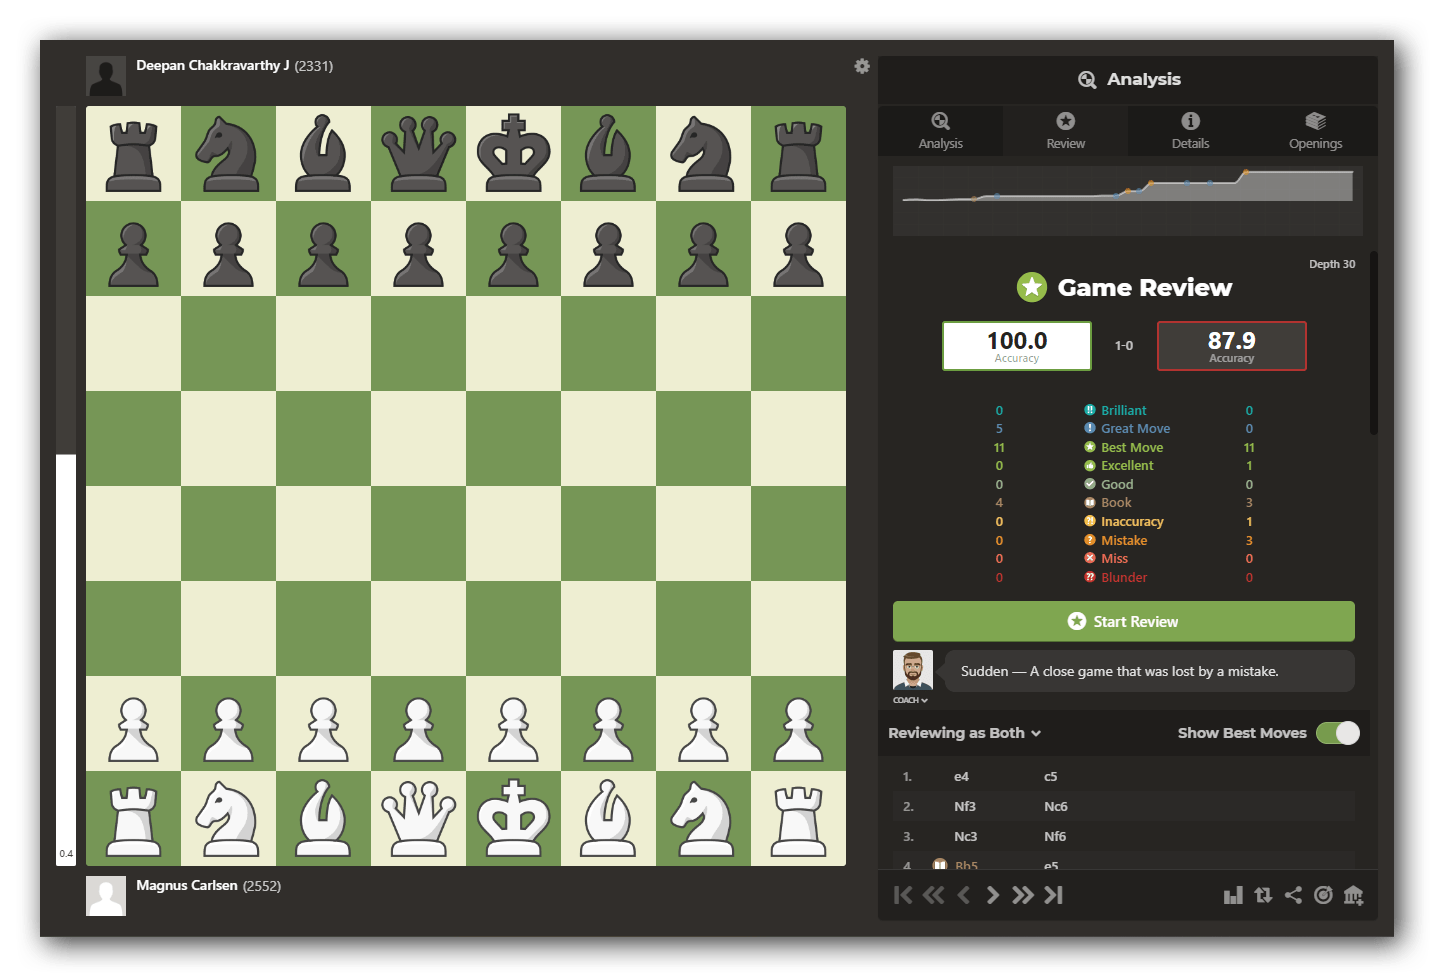 The chess games of Alexander Alekhine